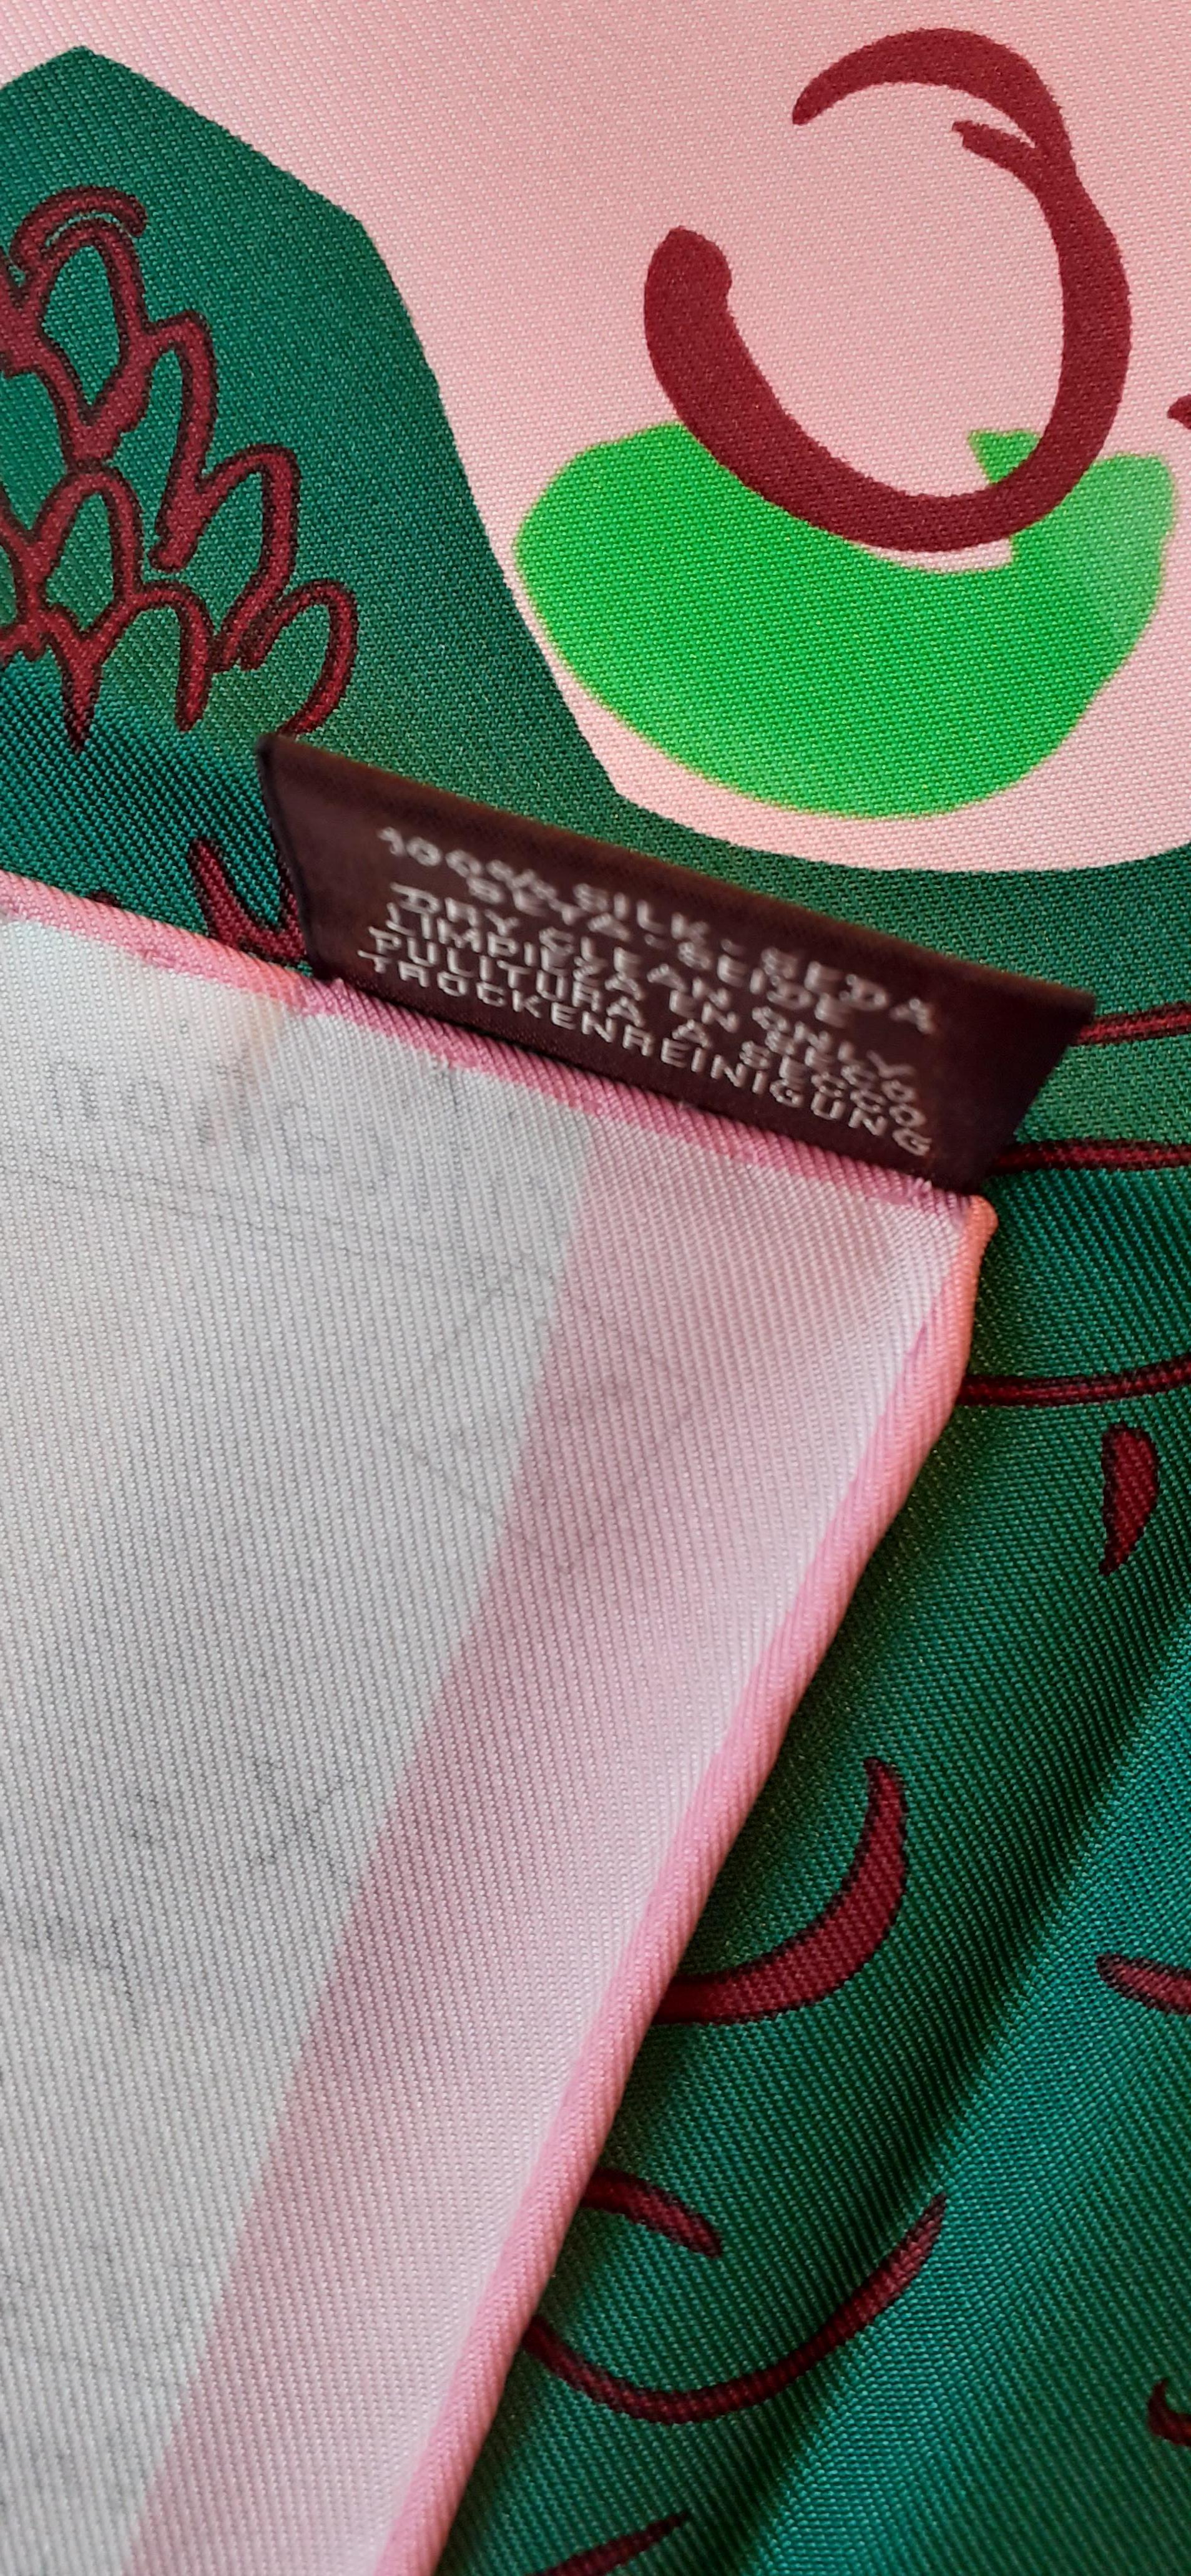 Hermès Silk Scarf La Maison des Oiseaux Parleurs Bela Silva Pink Green 90cm 6